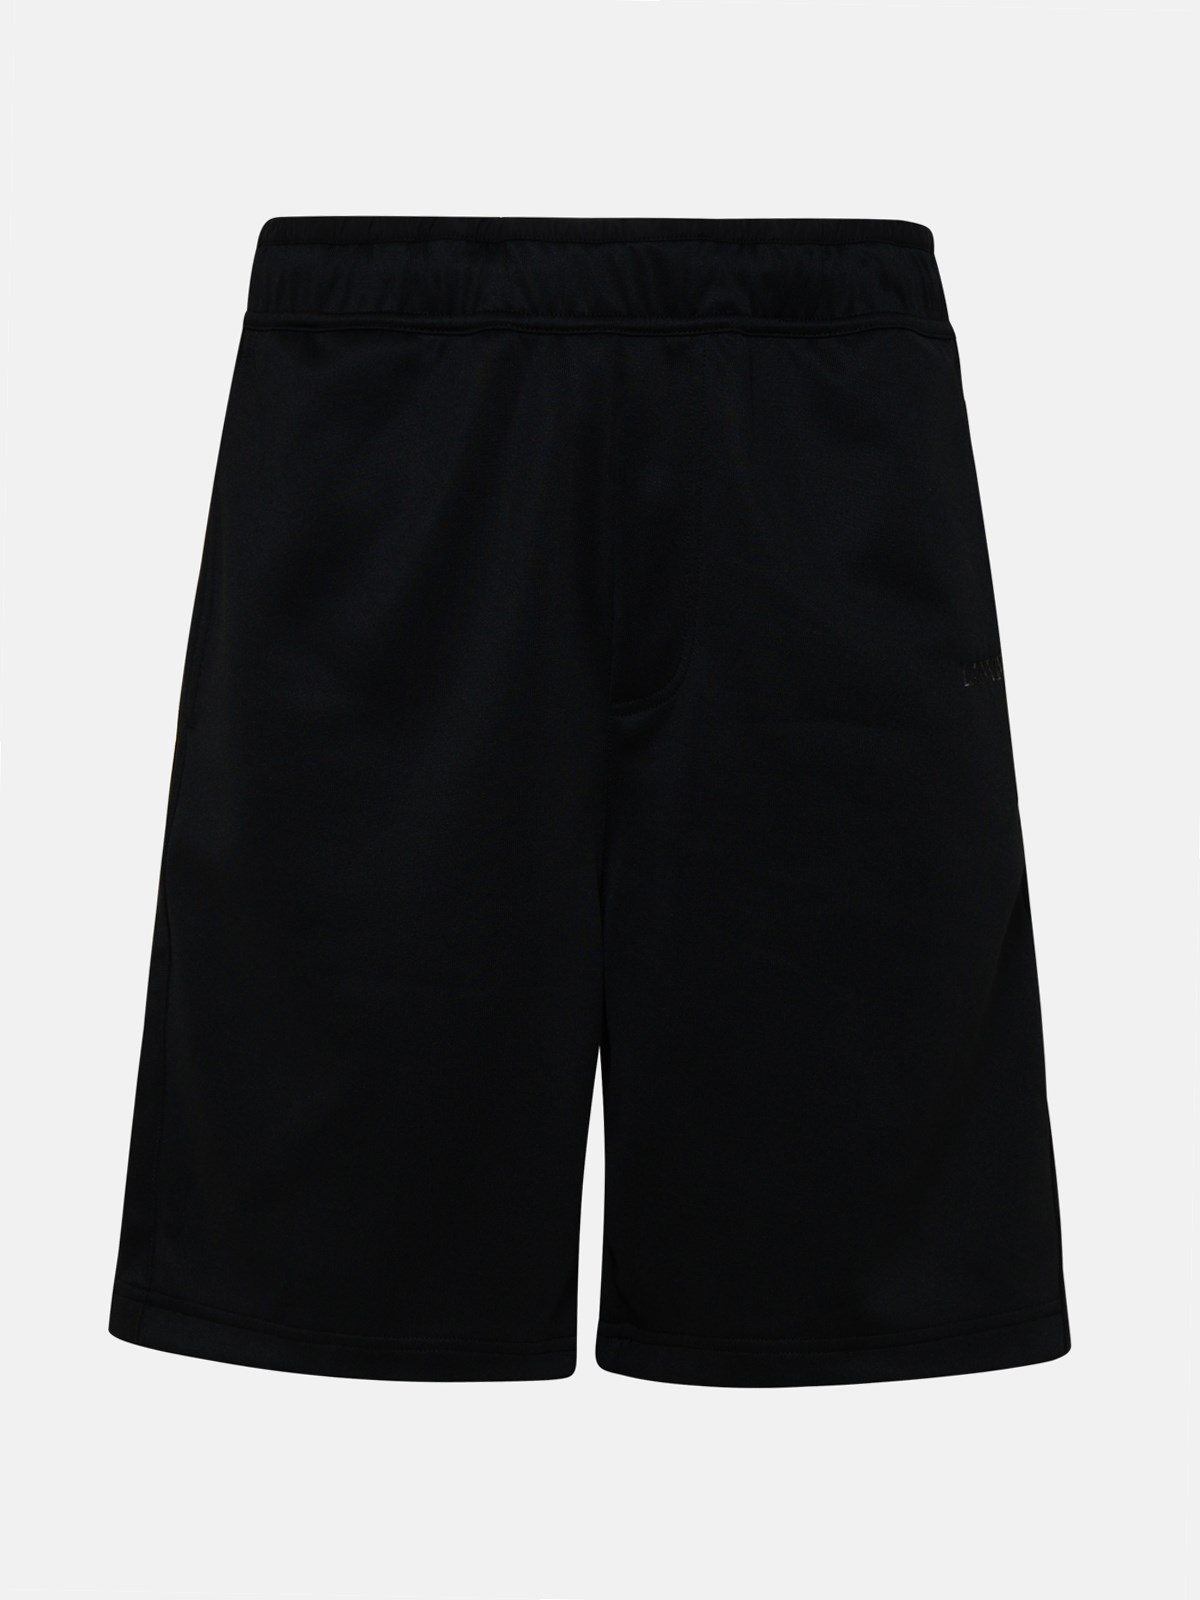 Lanvin Black Cotton Blend Bermuda Shorts